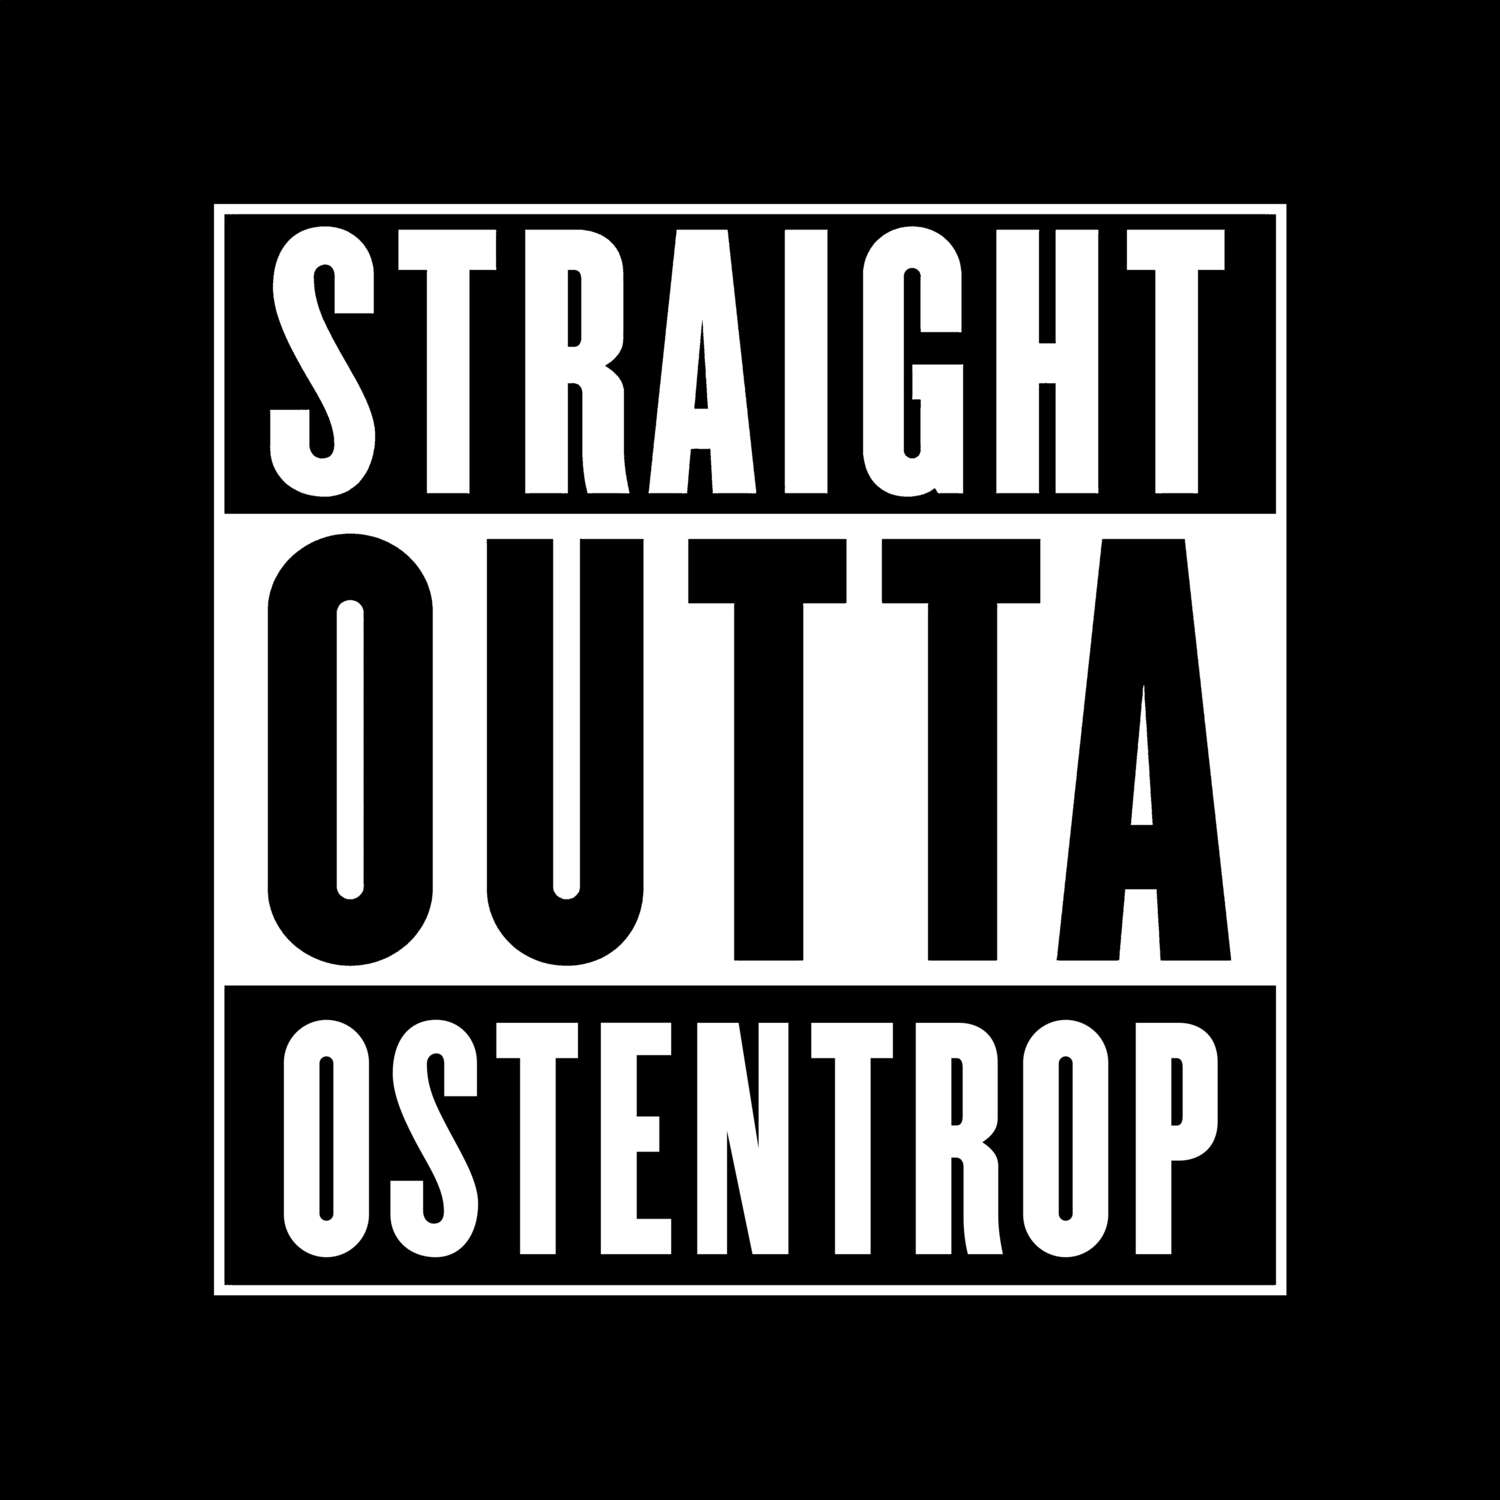 Ostentrop T-Shirt »Straight Outta«